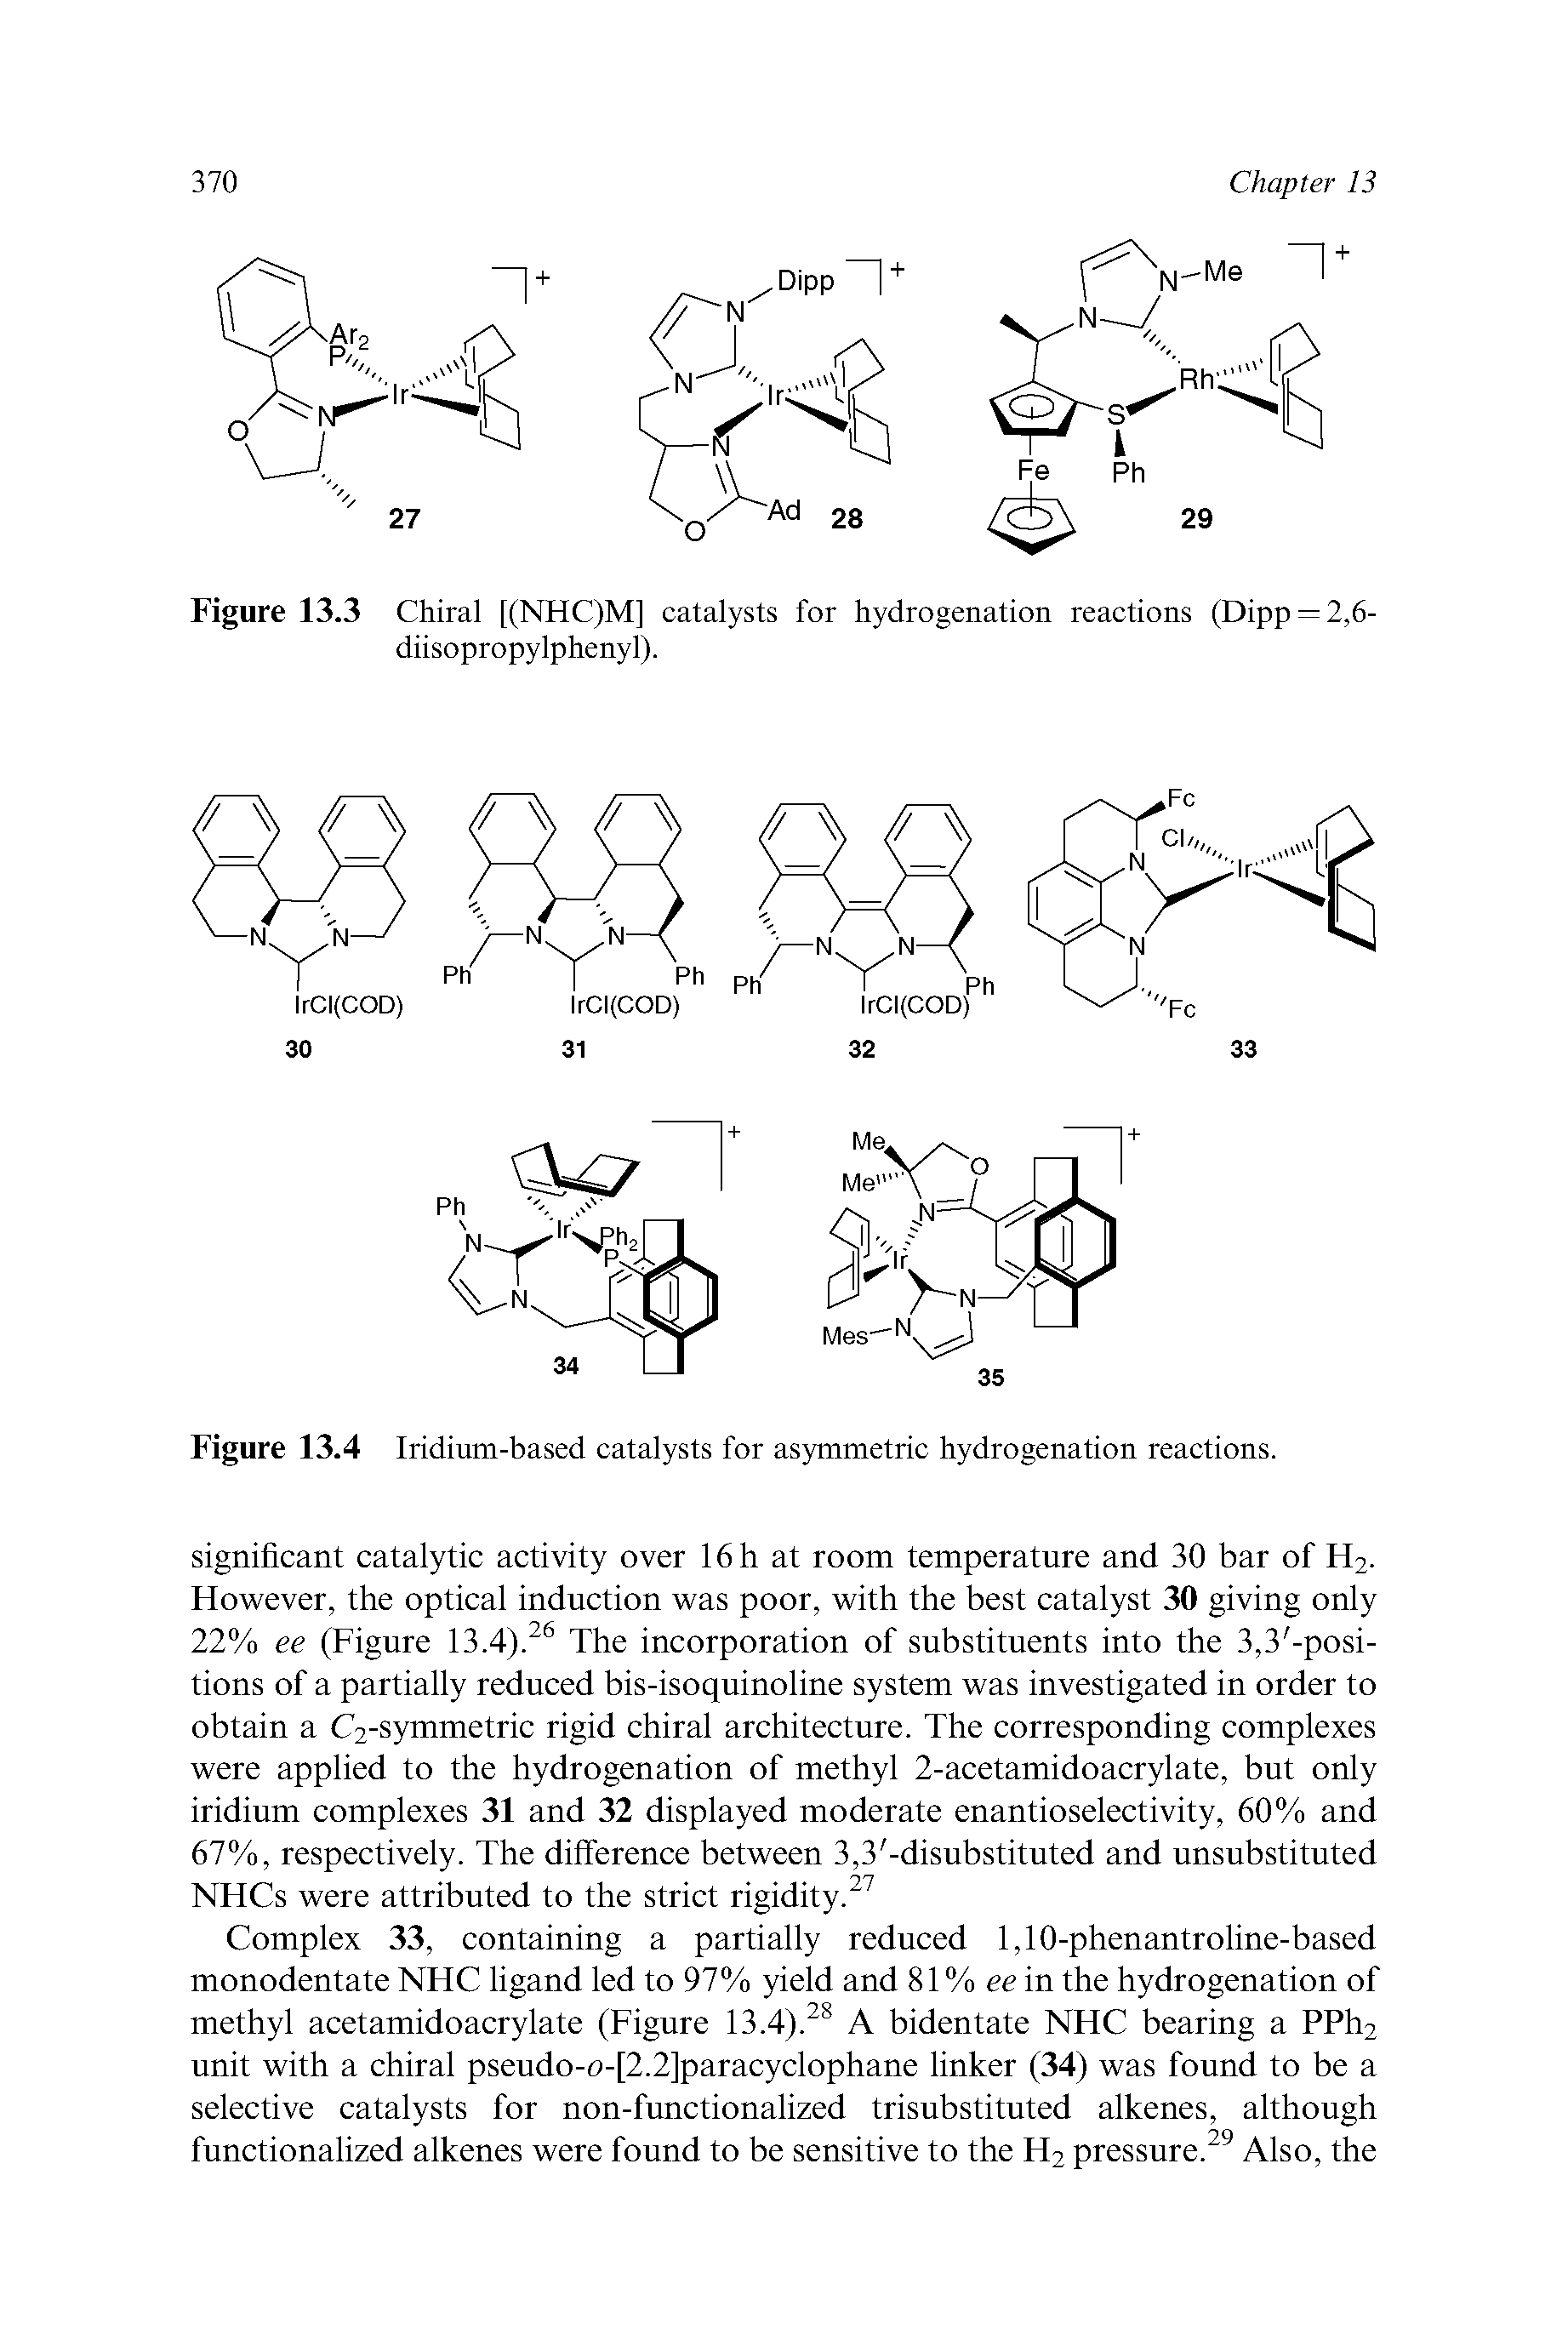 Figure 13.4 Iridium-based catalysts for asymmetric hydrogenation reactions.